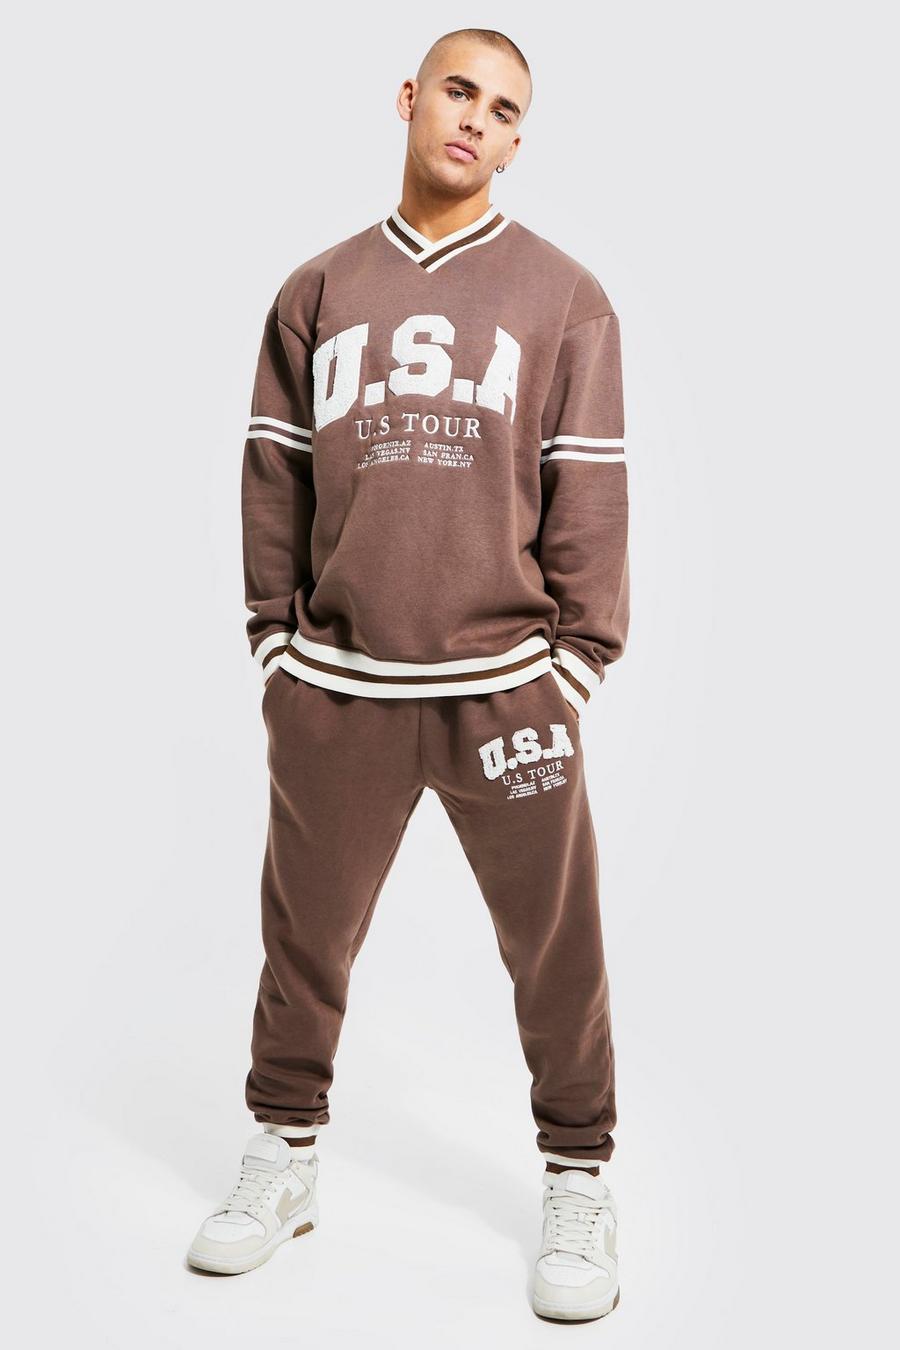 Men Tracksuit Set Winter ‘ New York’ Print Sweatshirt Top&Loose Sportswear Pants for Jogger Sports Gym Fitness Running 